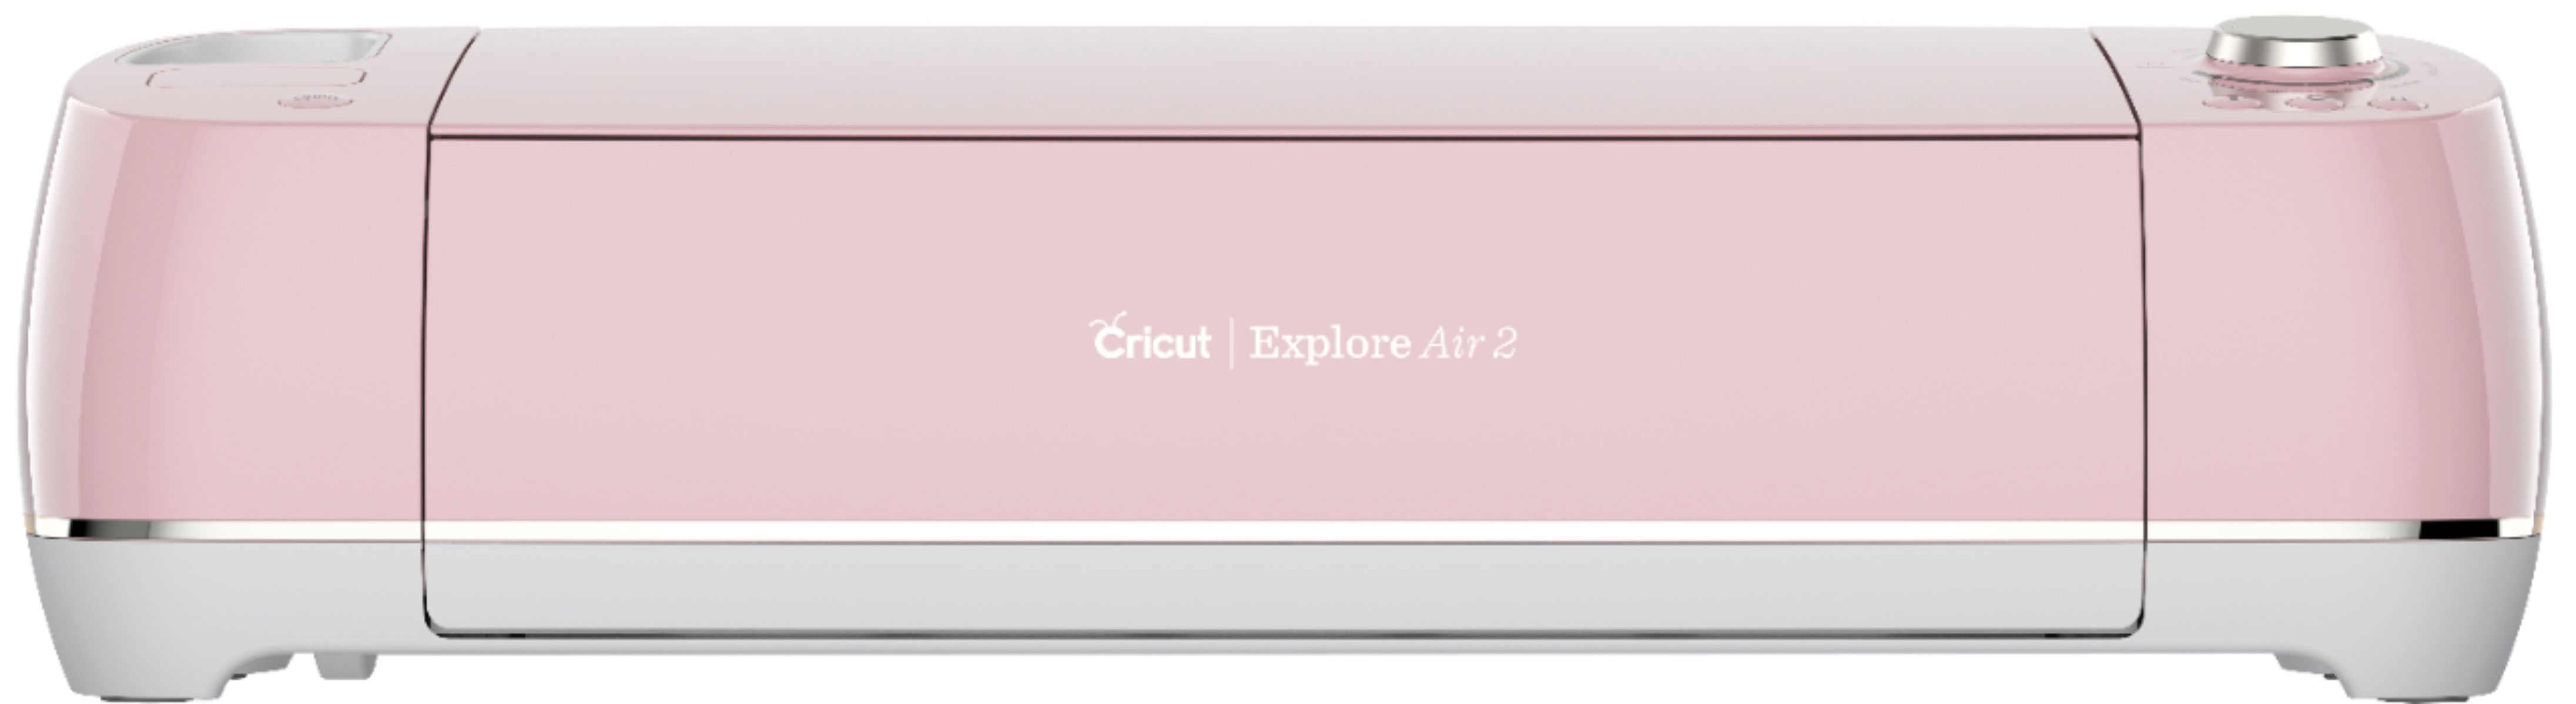 GH Tested: Cricut Explore Air 2 Review